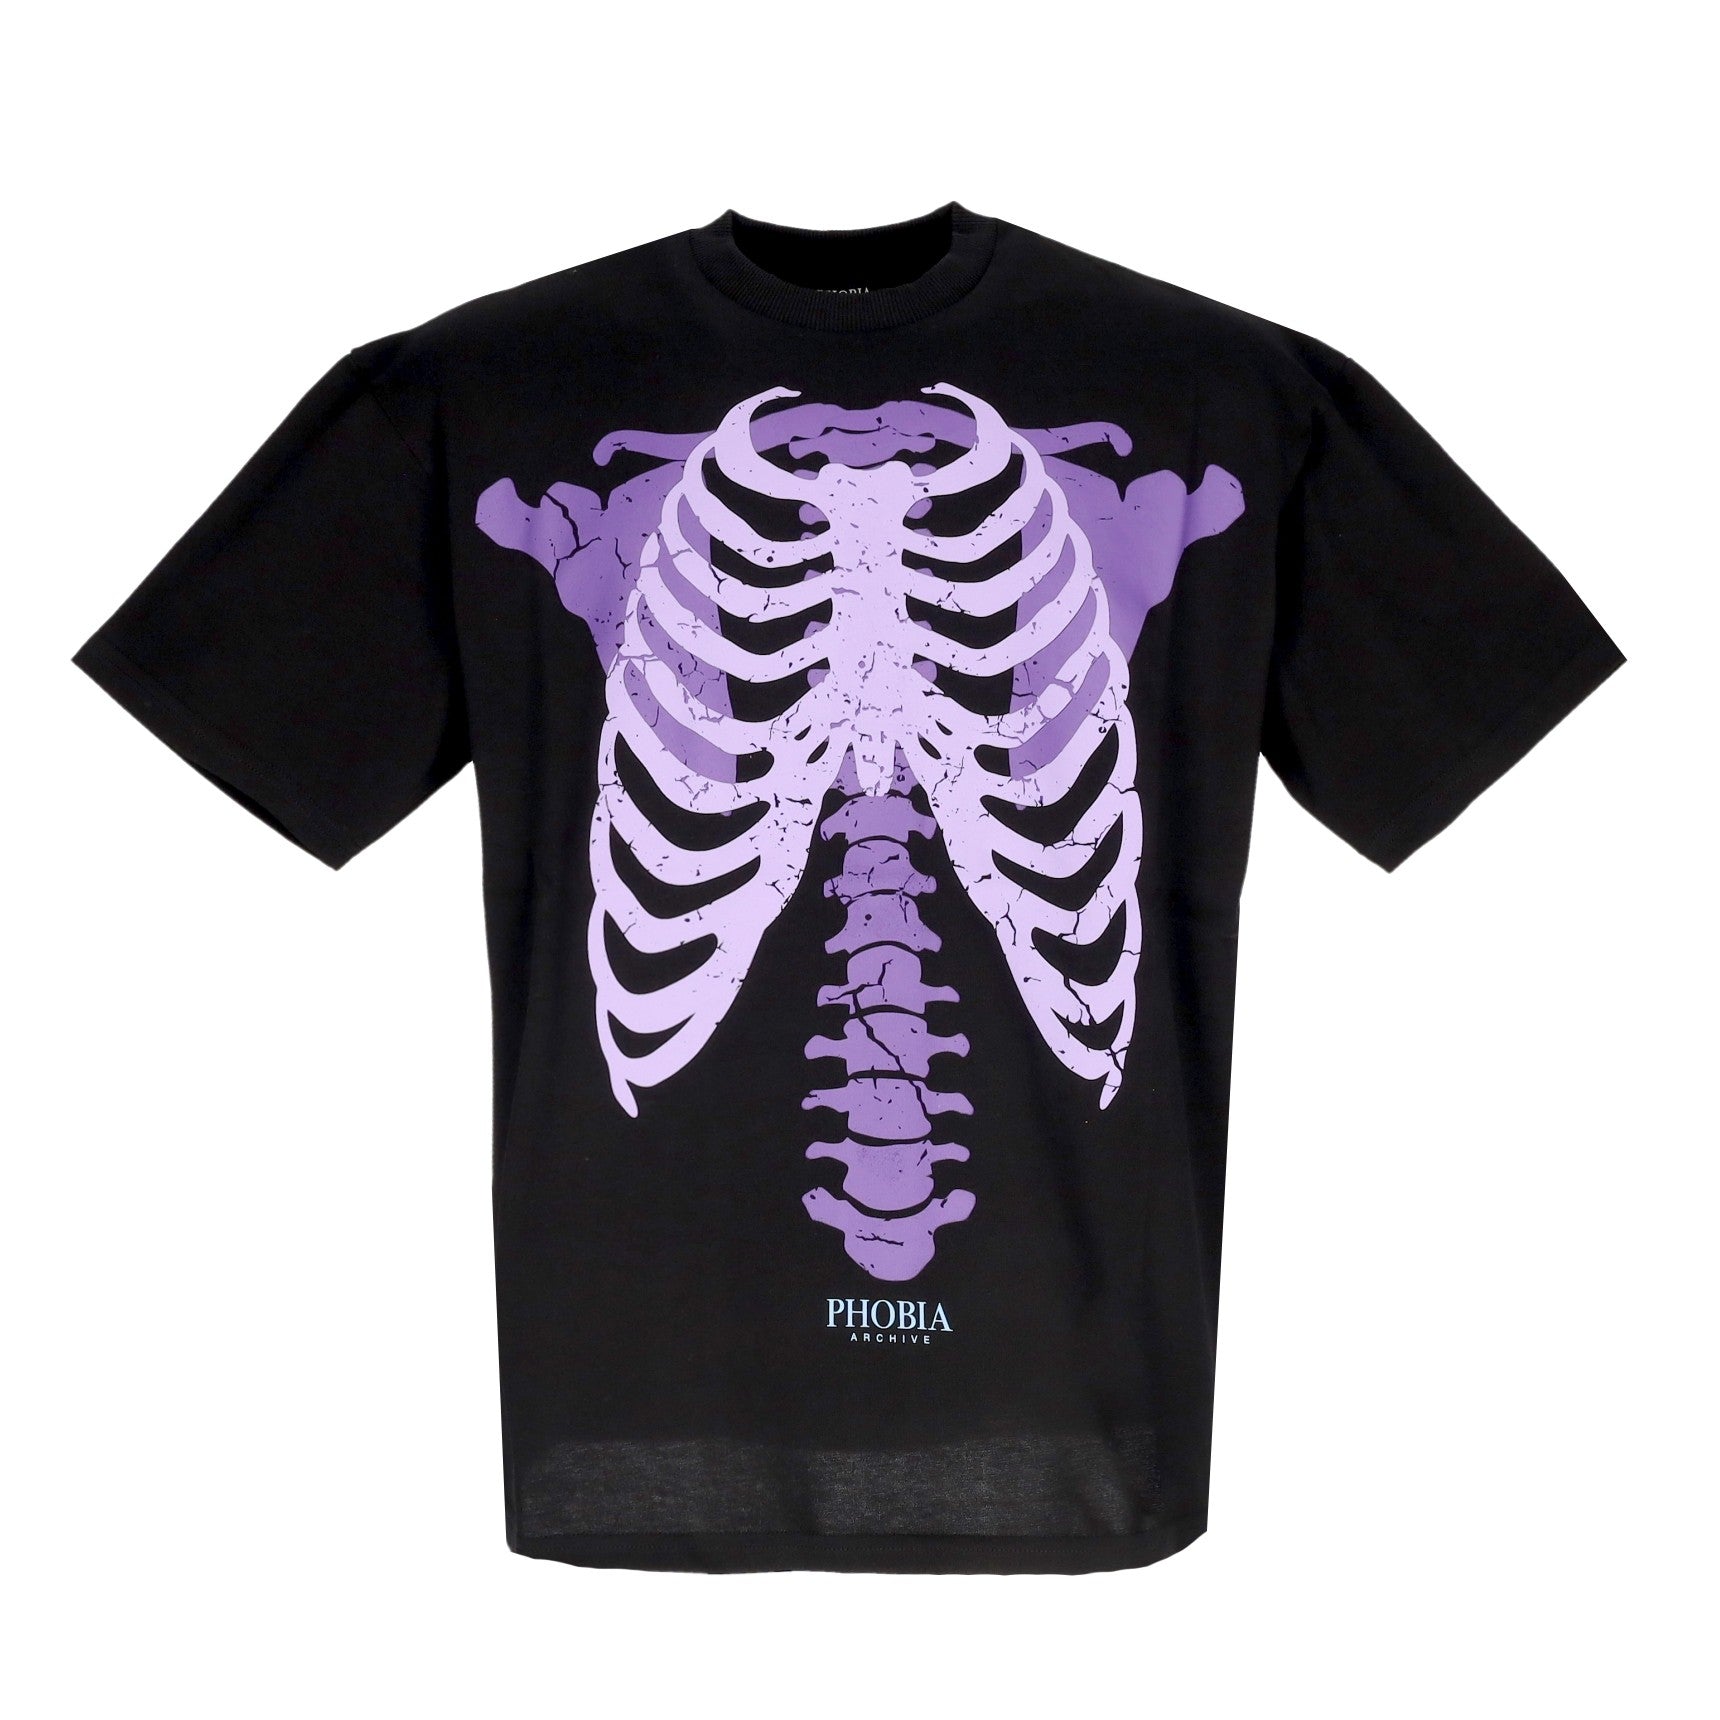 Bones Tee Men's T-Shirt Black/purple/lilac